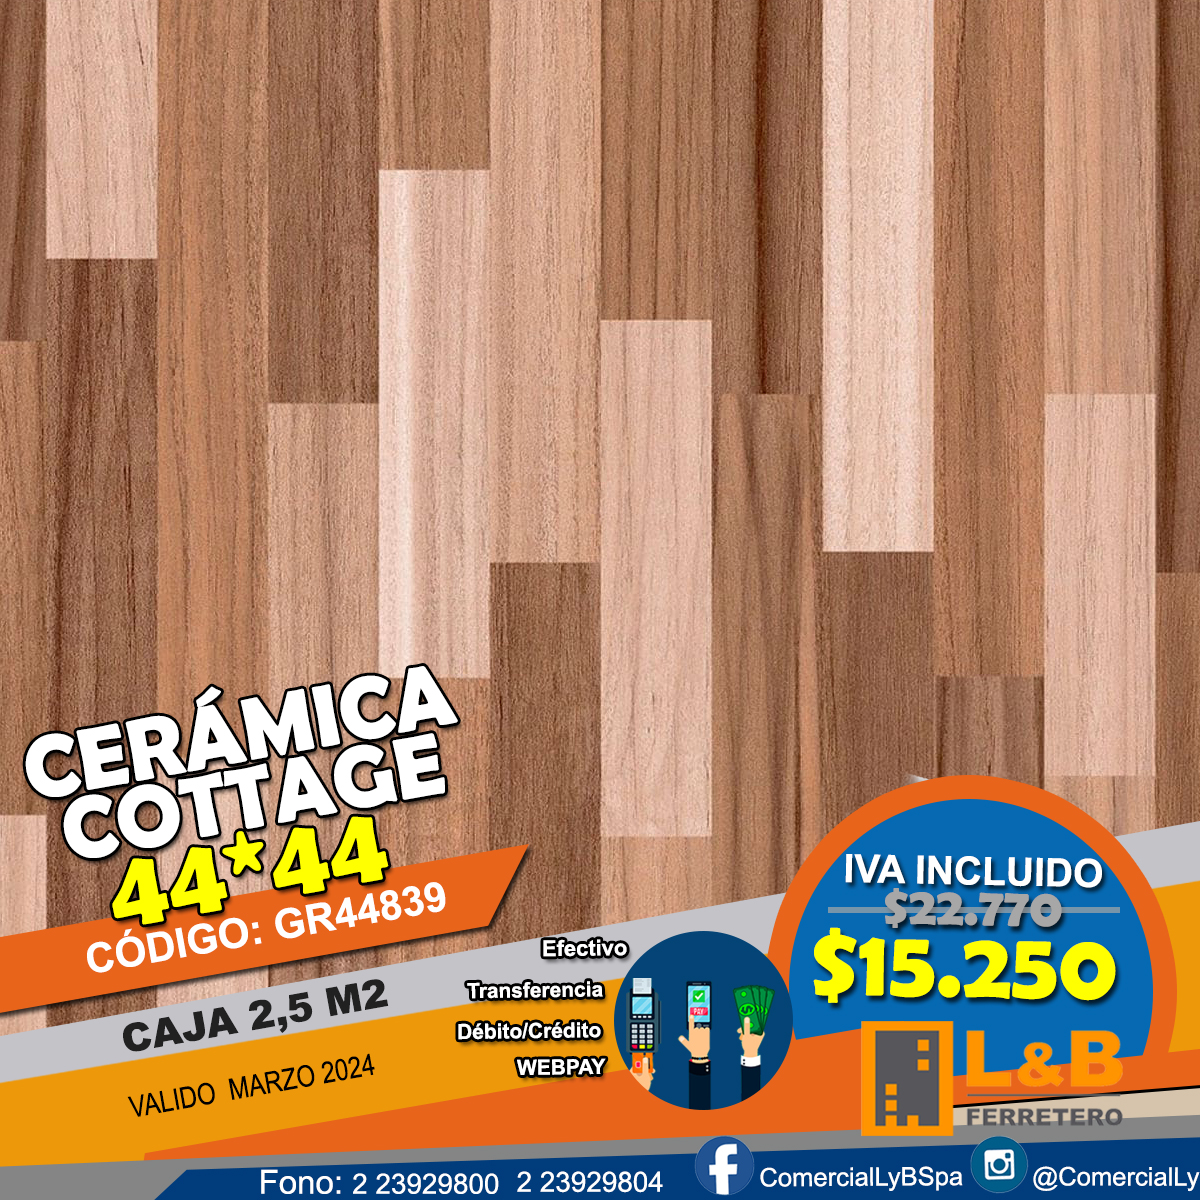 Ceramica LEF 44x44 GR44839 Cottage caja de 2,5M2